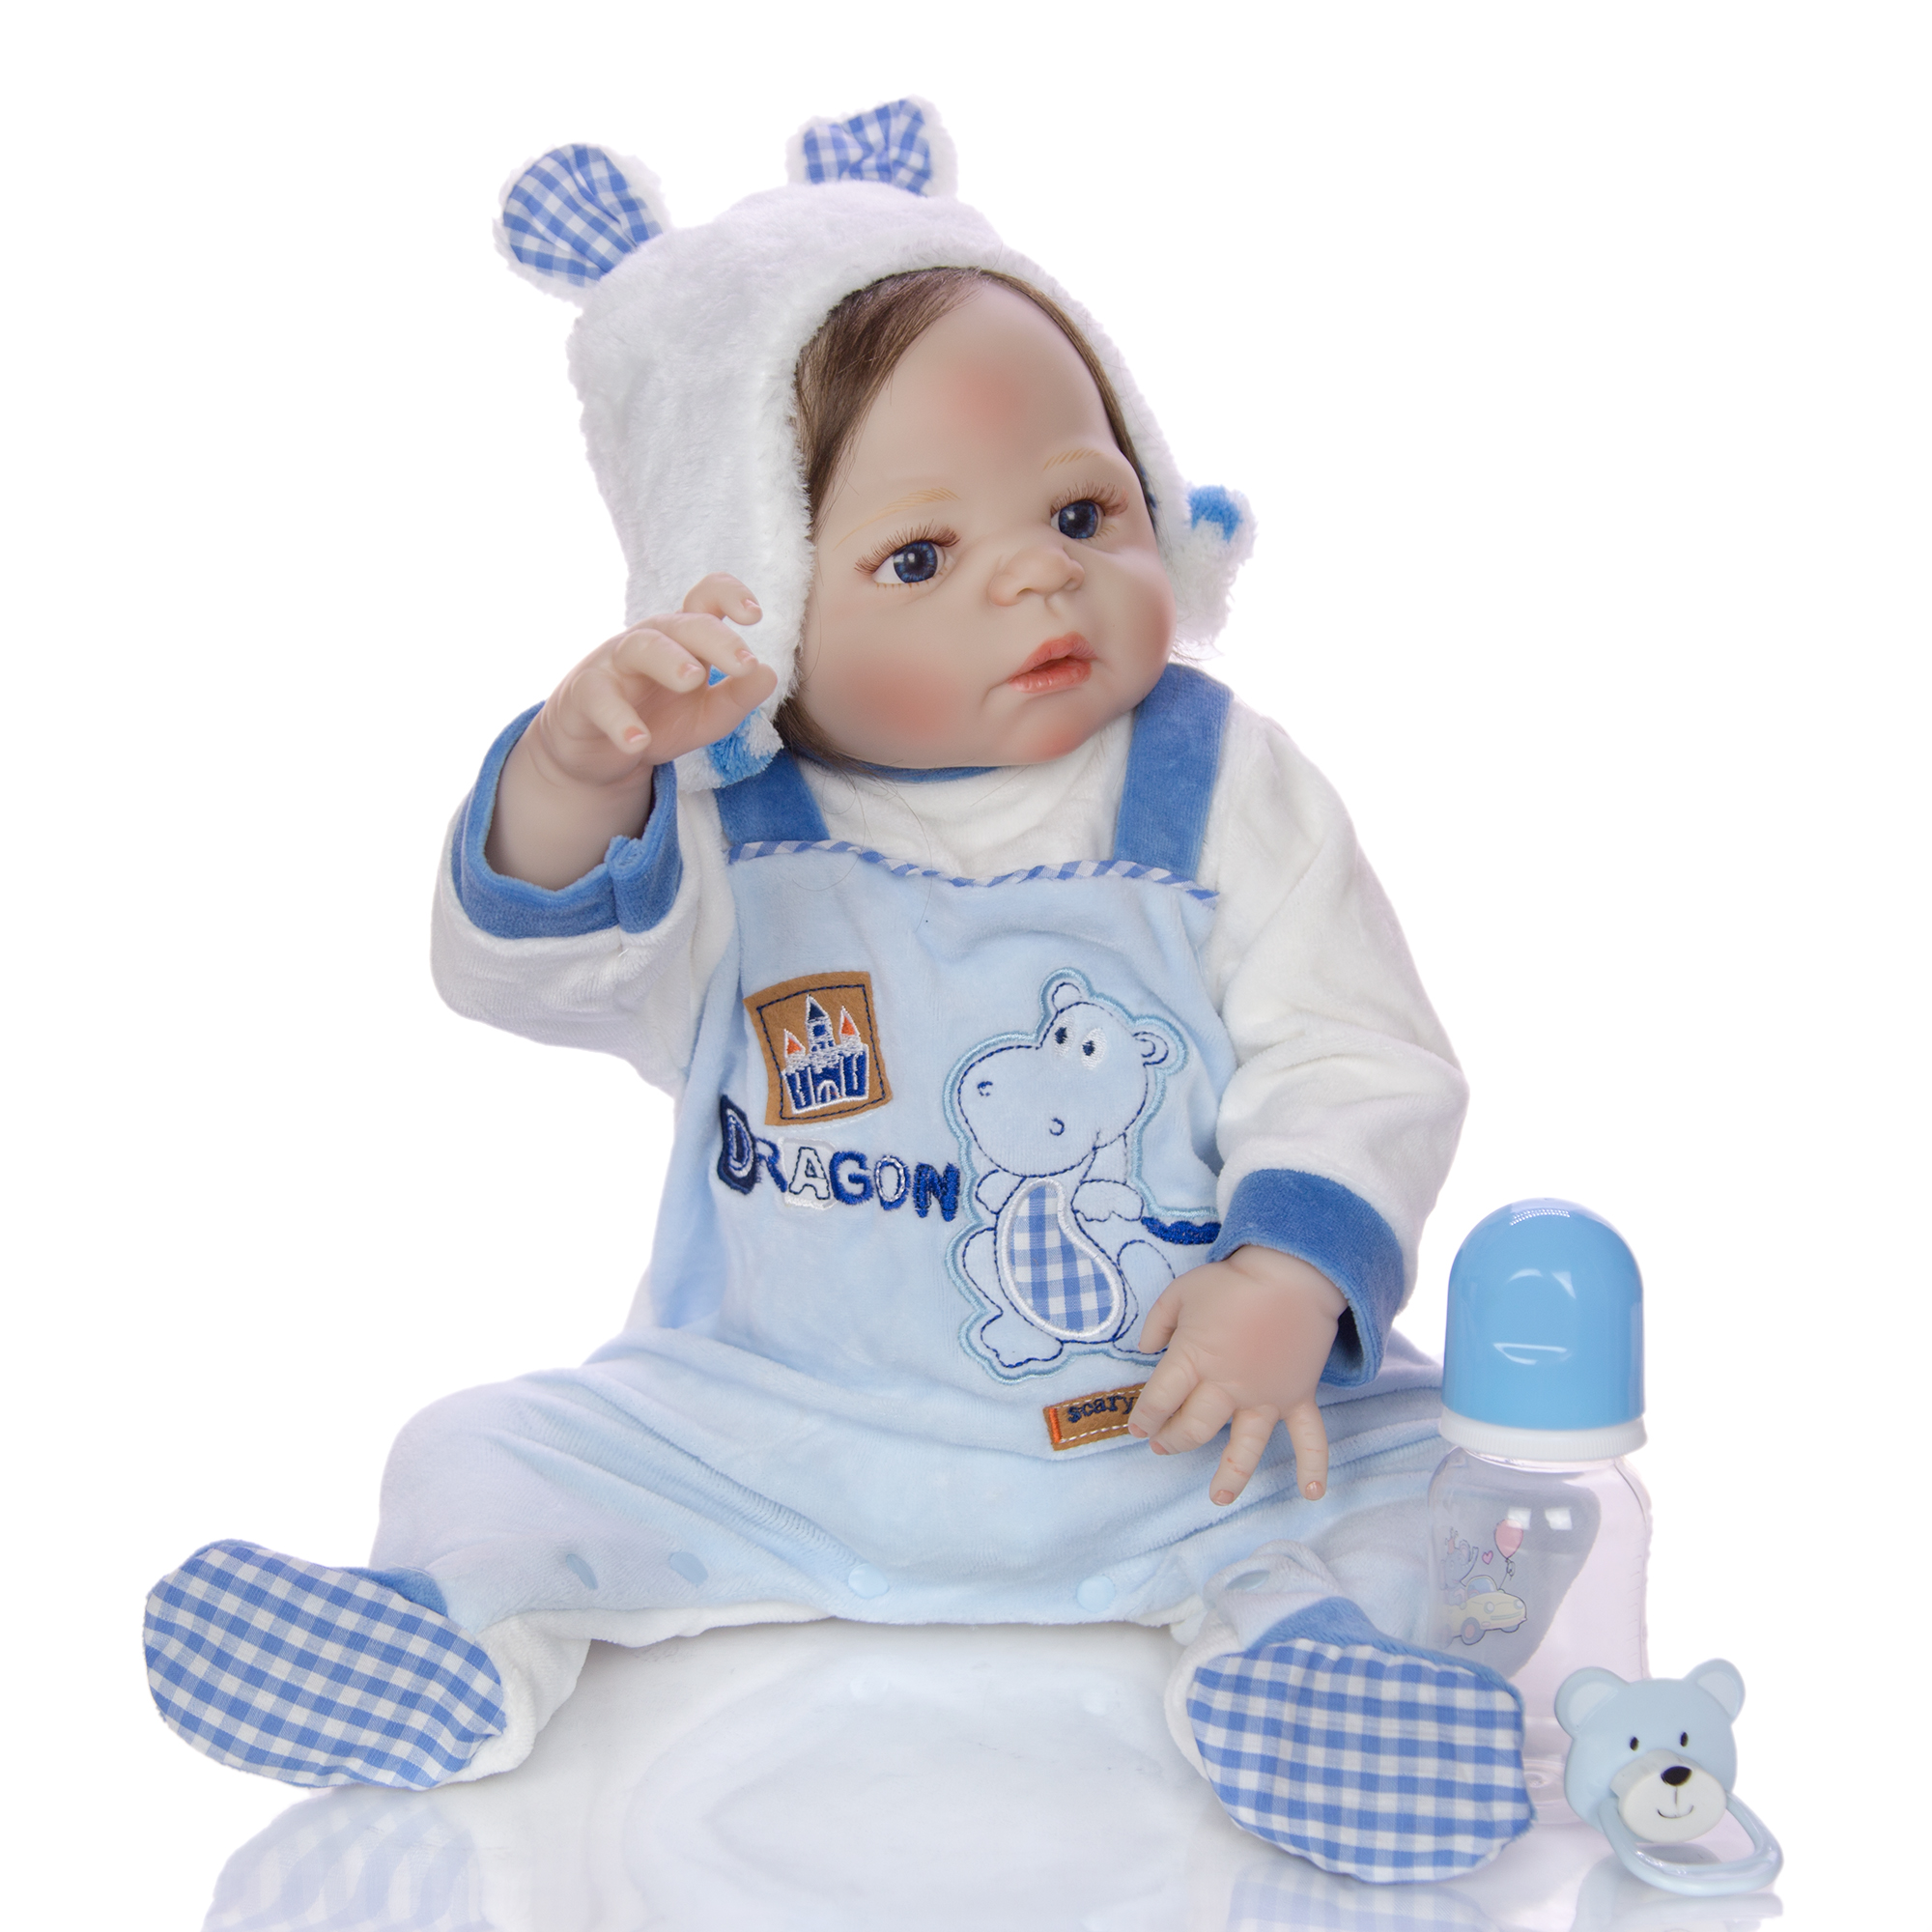 KEIUMI 23'' 57 cm Realistic Reborn Doll Full Vinyl Body Silicone Lifelike Baby Doll Toy For Boy Kid Playmate Children's Day Gift